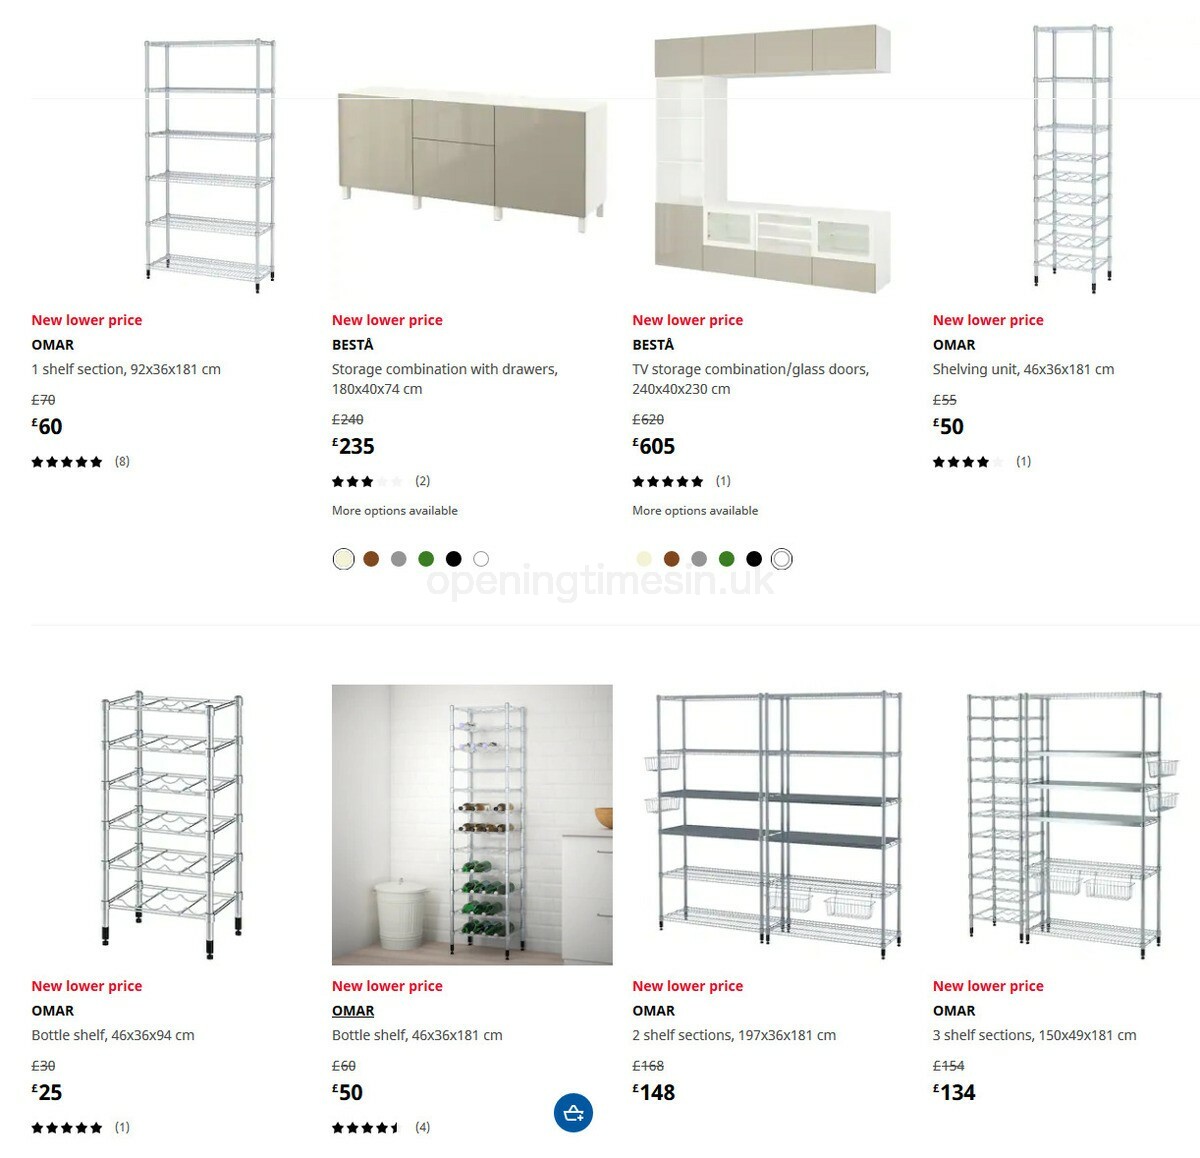 IKEA Sale Offers from 13 July